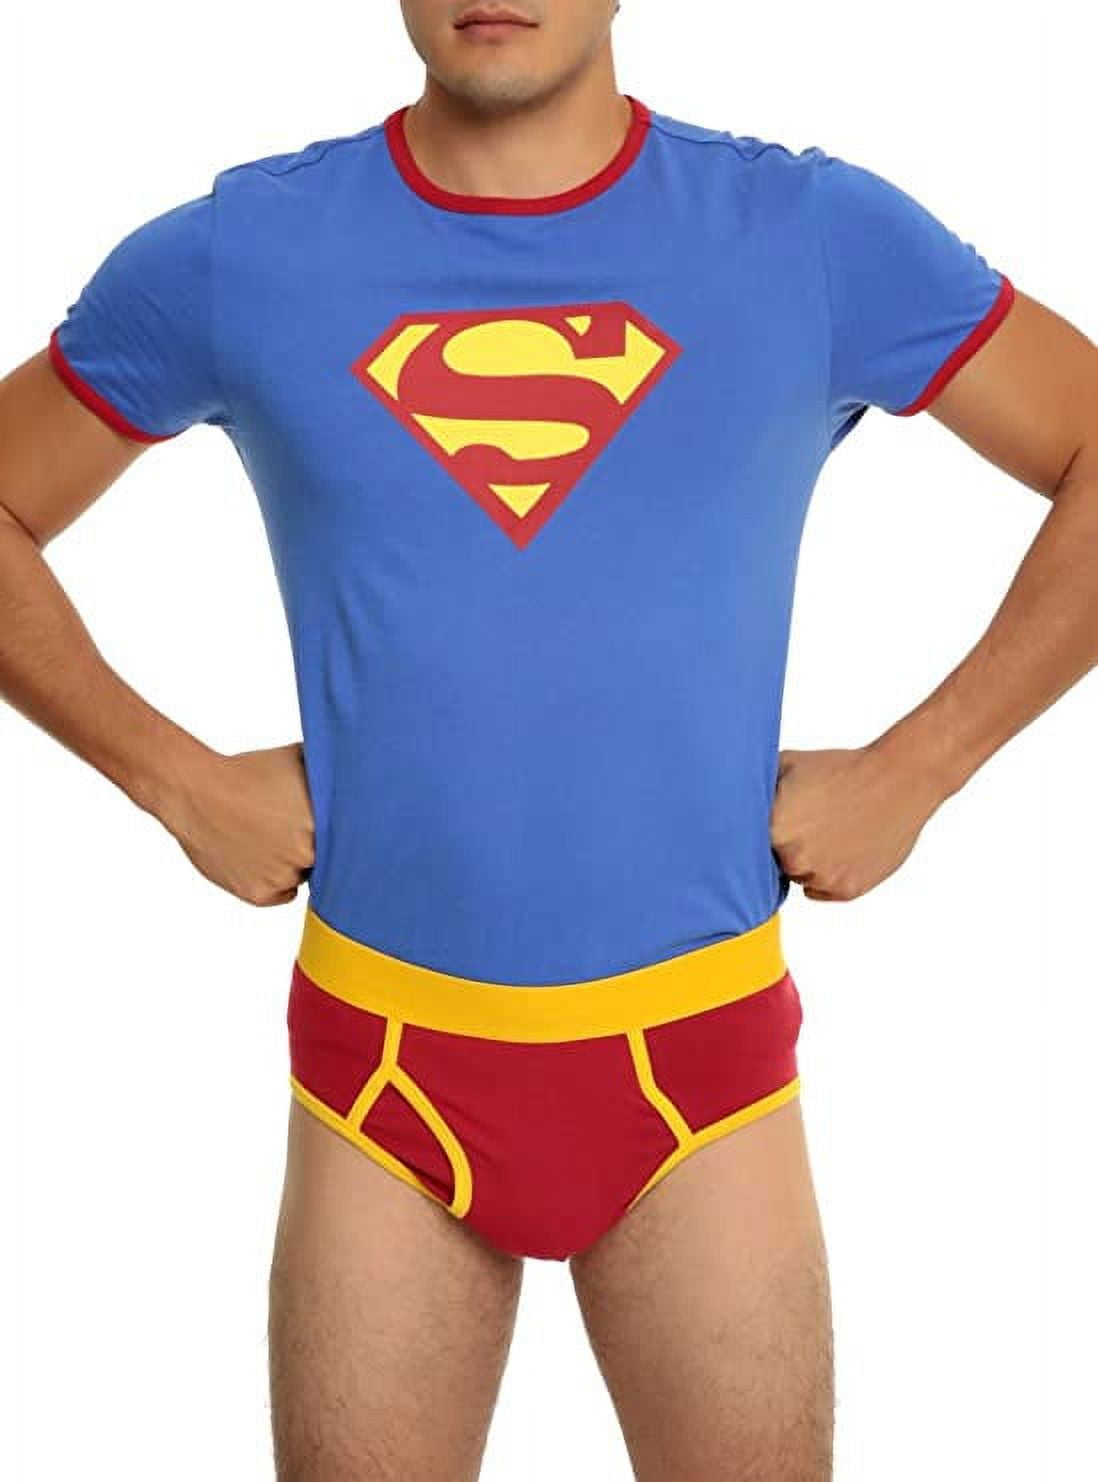 Underoos DC Comics Superman Men's Underoos Set, X-Large